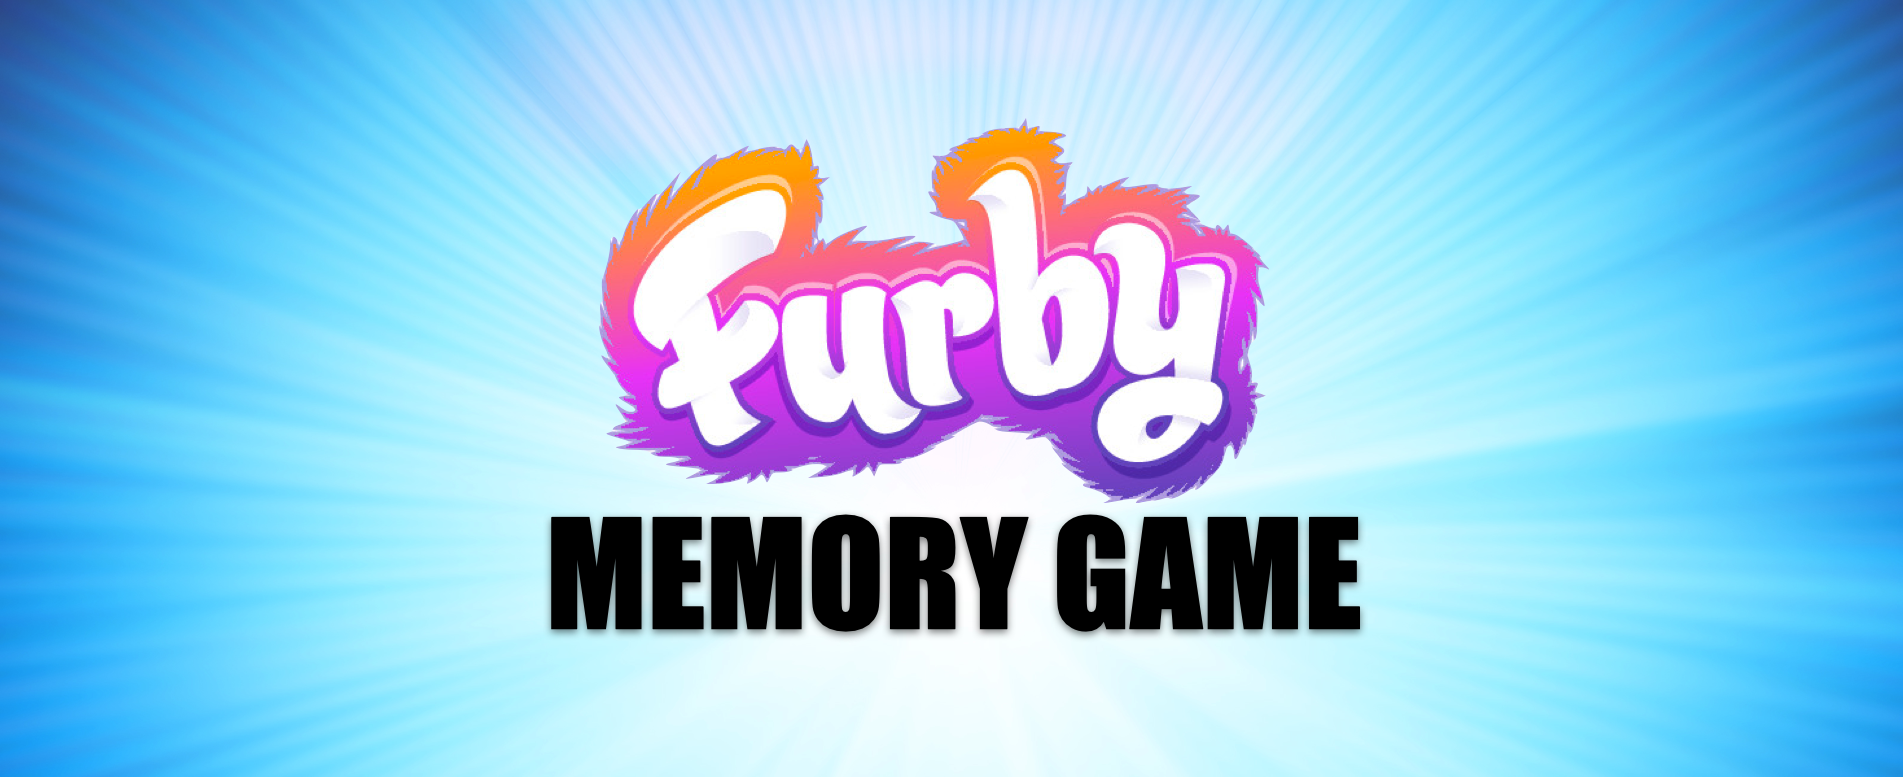 FURBY MEMOTY GAME